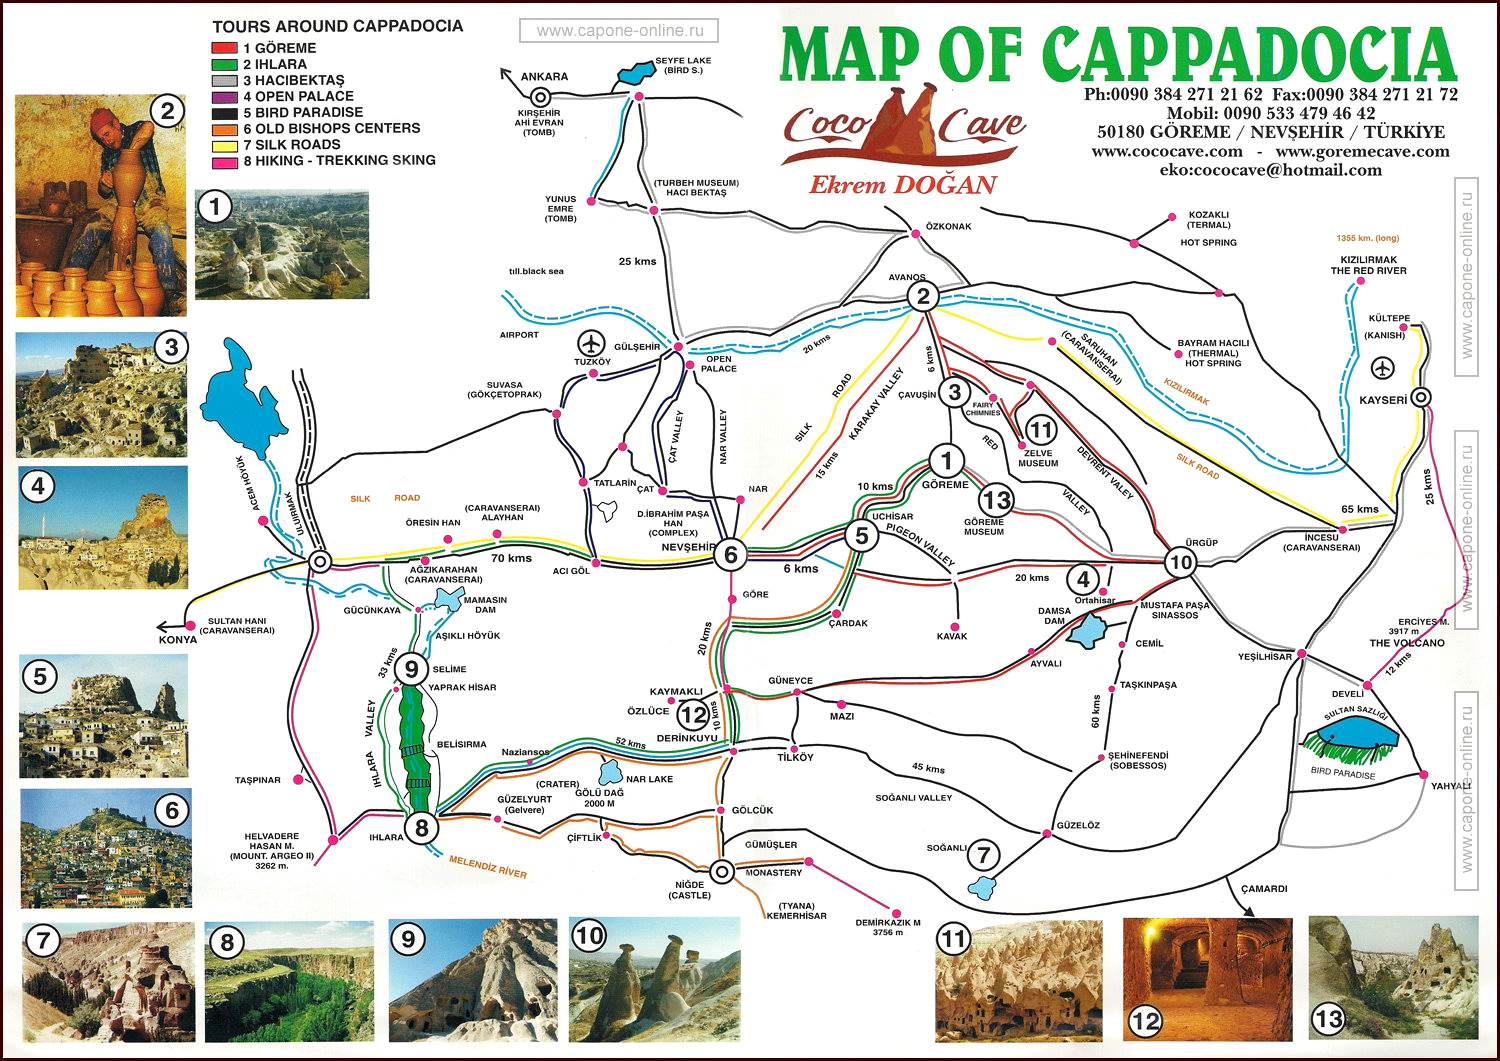 Schematic map of Cappadocia in Turkey